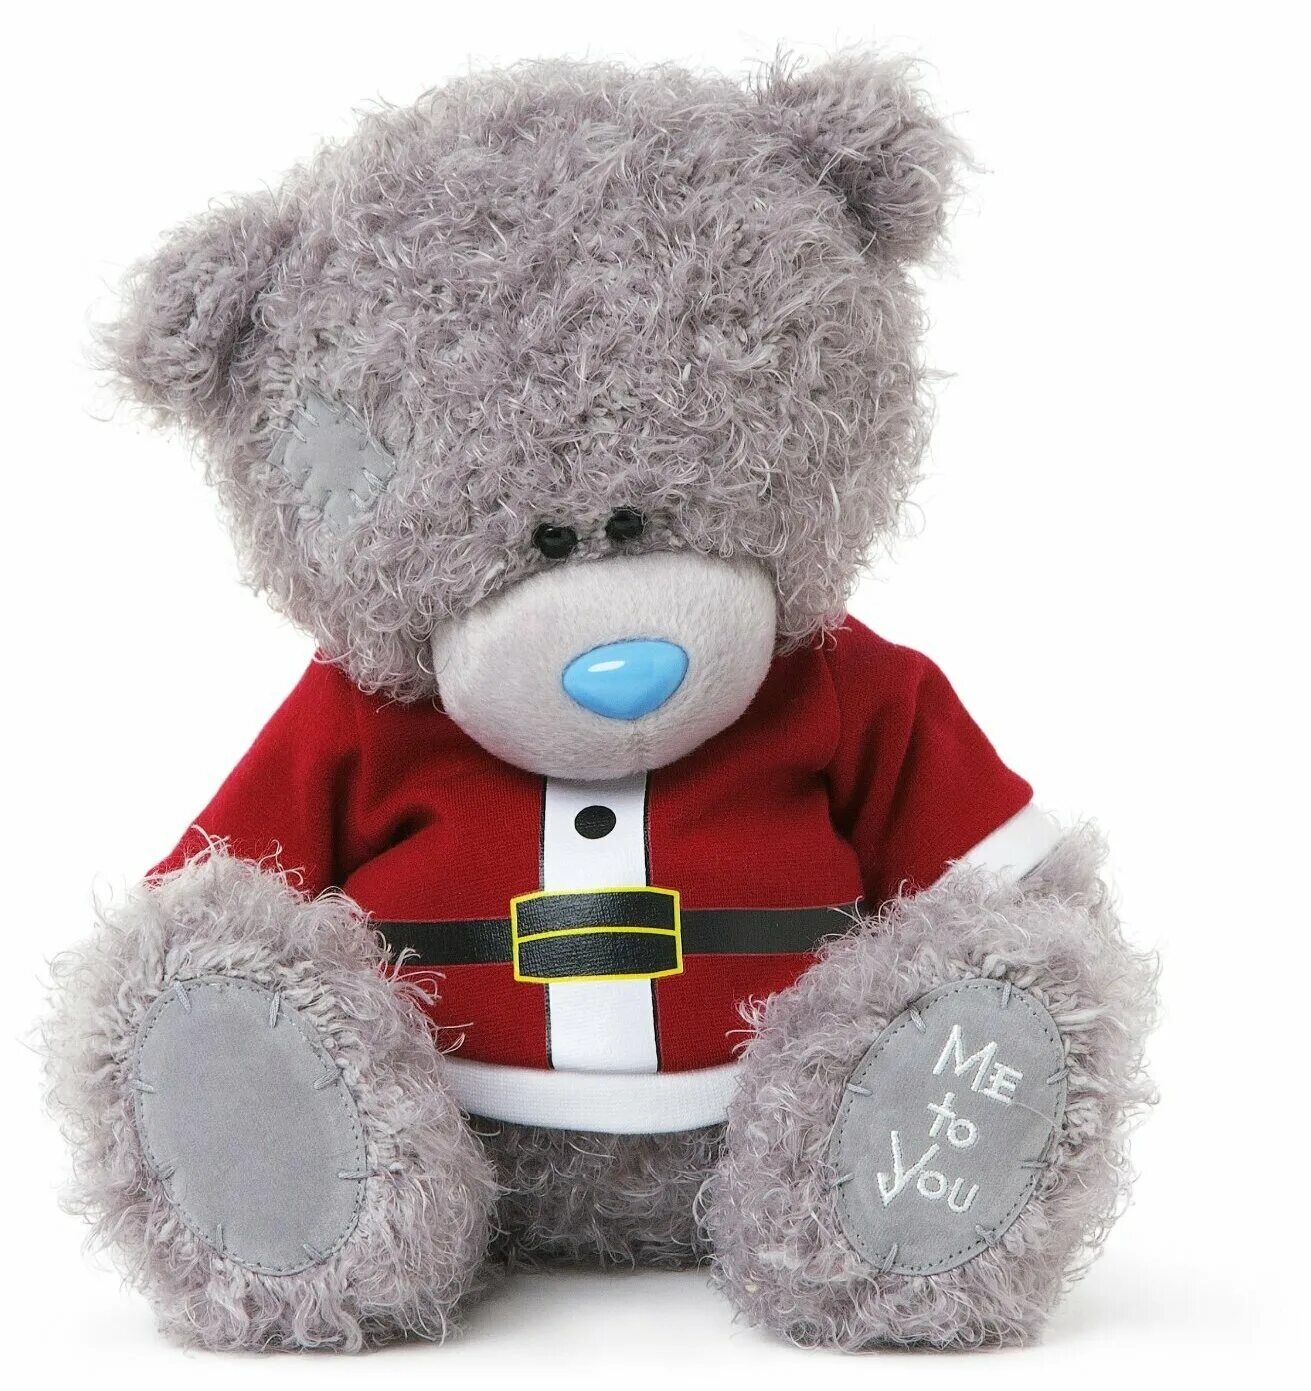 Плюшевый мишка Тедди. Мишка Тедди 23 см. Игрушка мишка Тедди me to you. Teddy Bear игрушка.